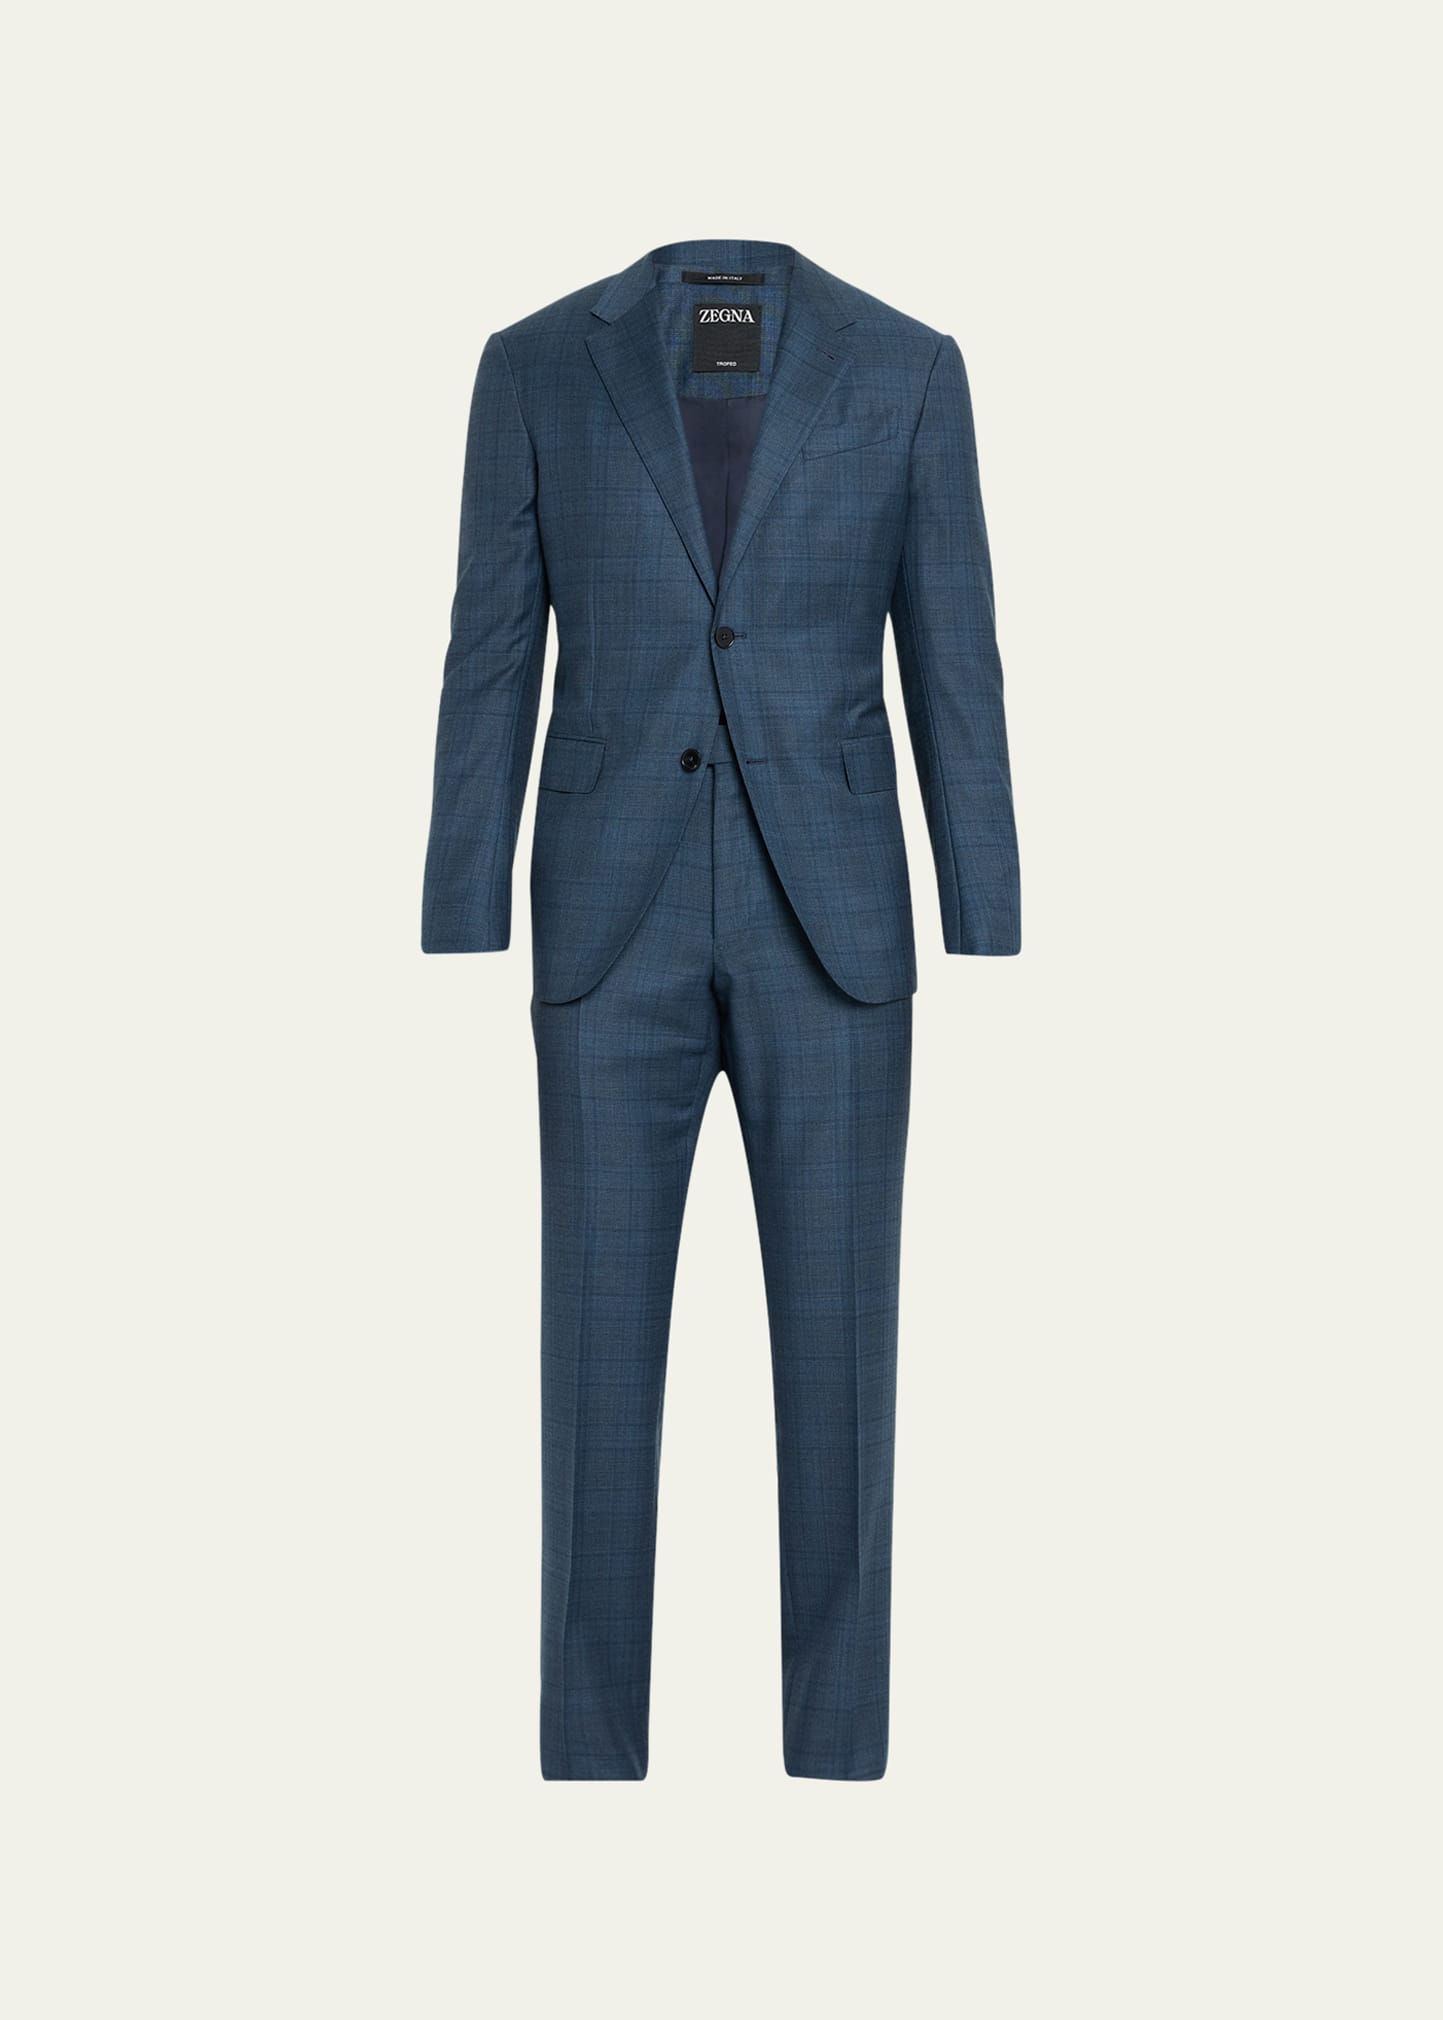 Zegna Men's Windowpane Wool Suit In Md Blu Ck